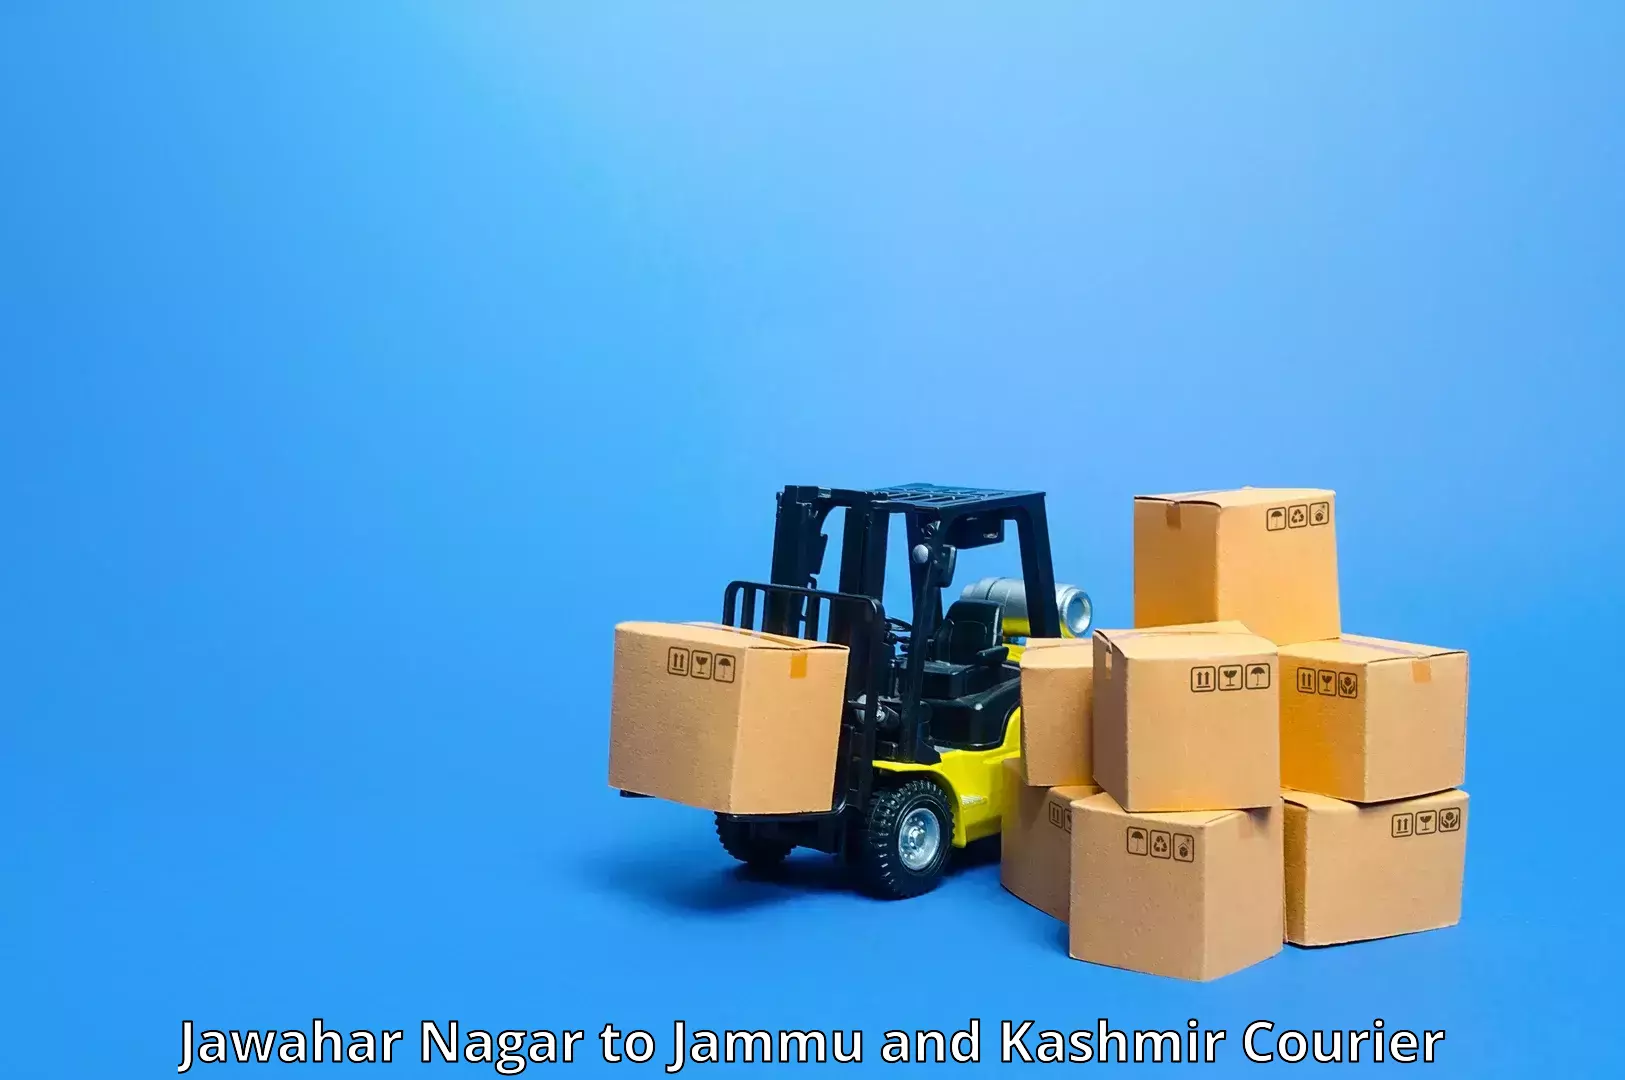 Courier service comparison Jawahar Nagar to Jammu and Kashmir